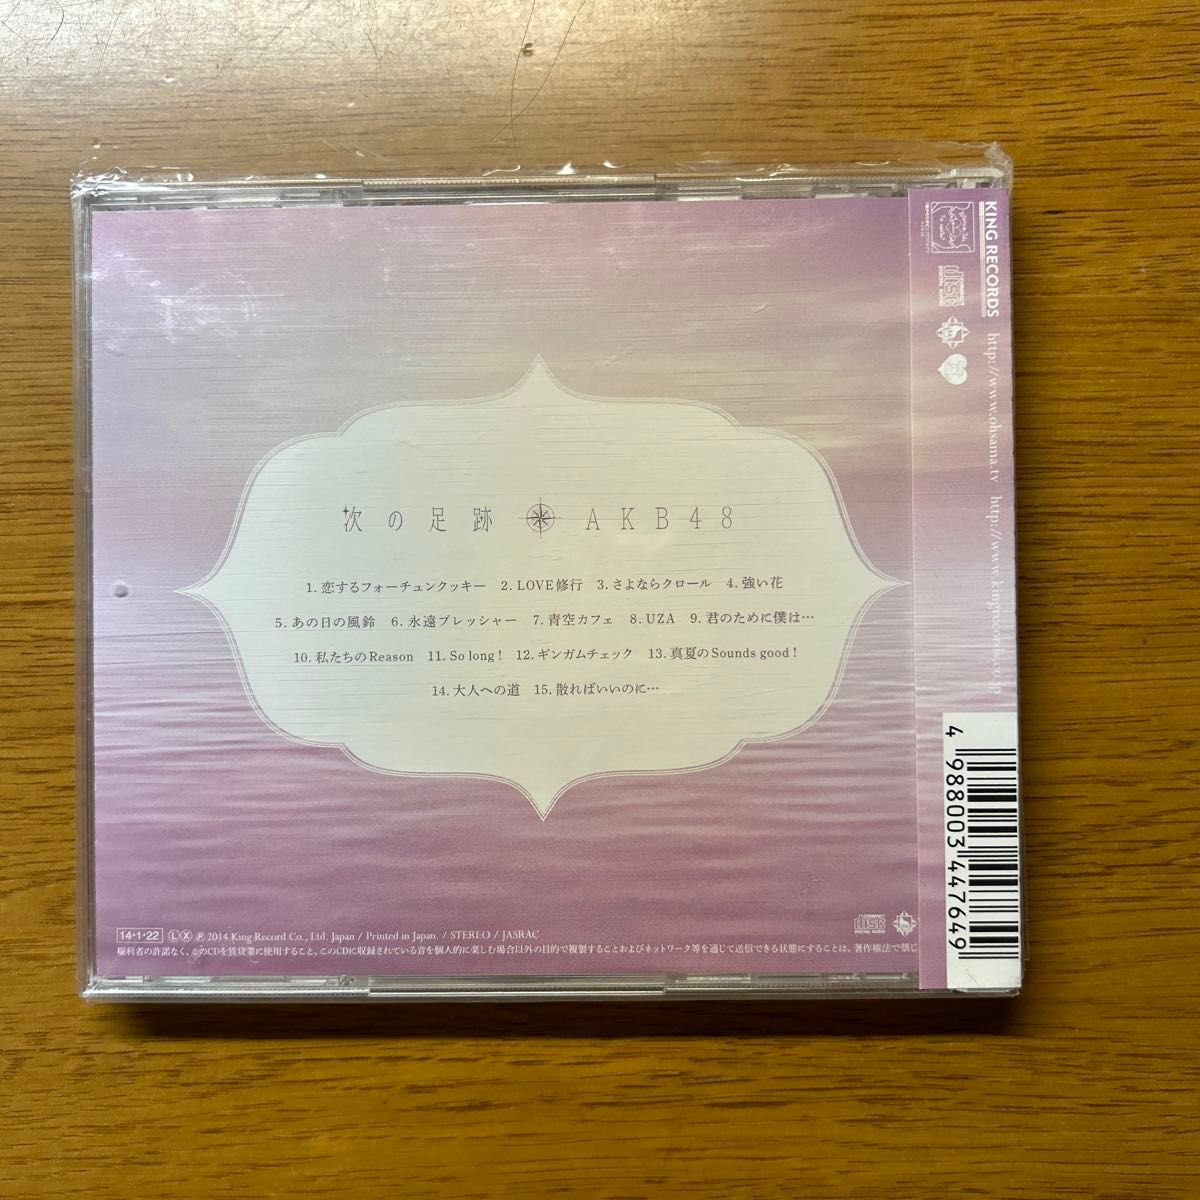 AKB48 次の足跡 劇場盤 アルバム CD